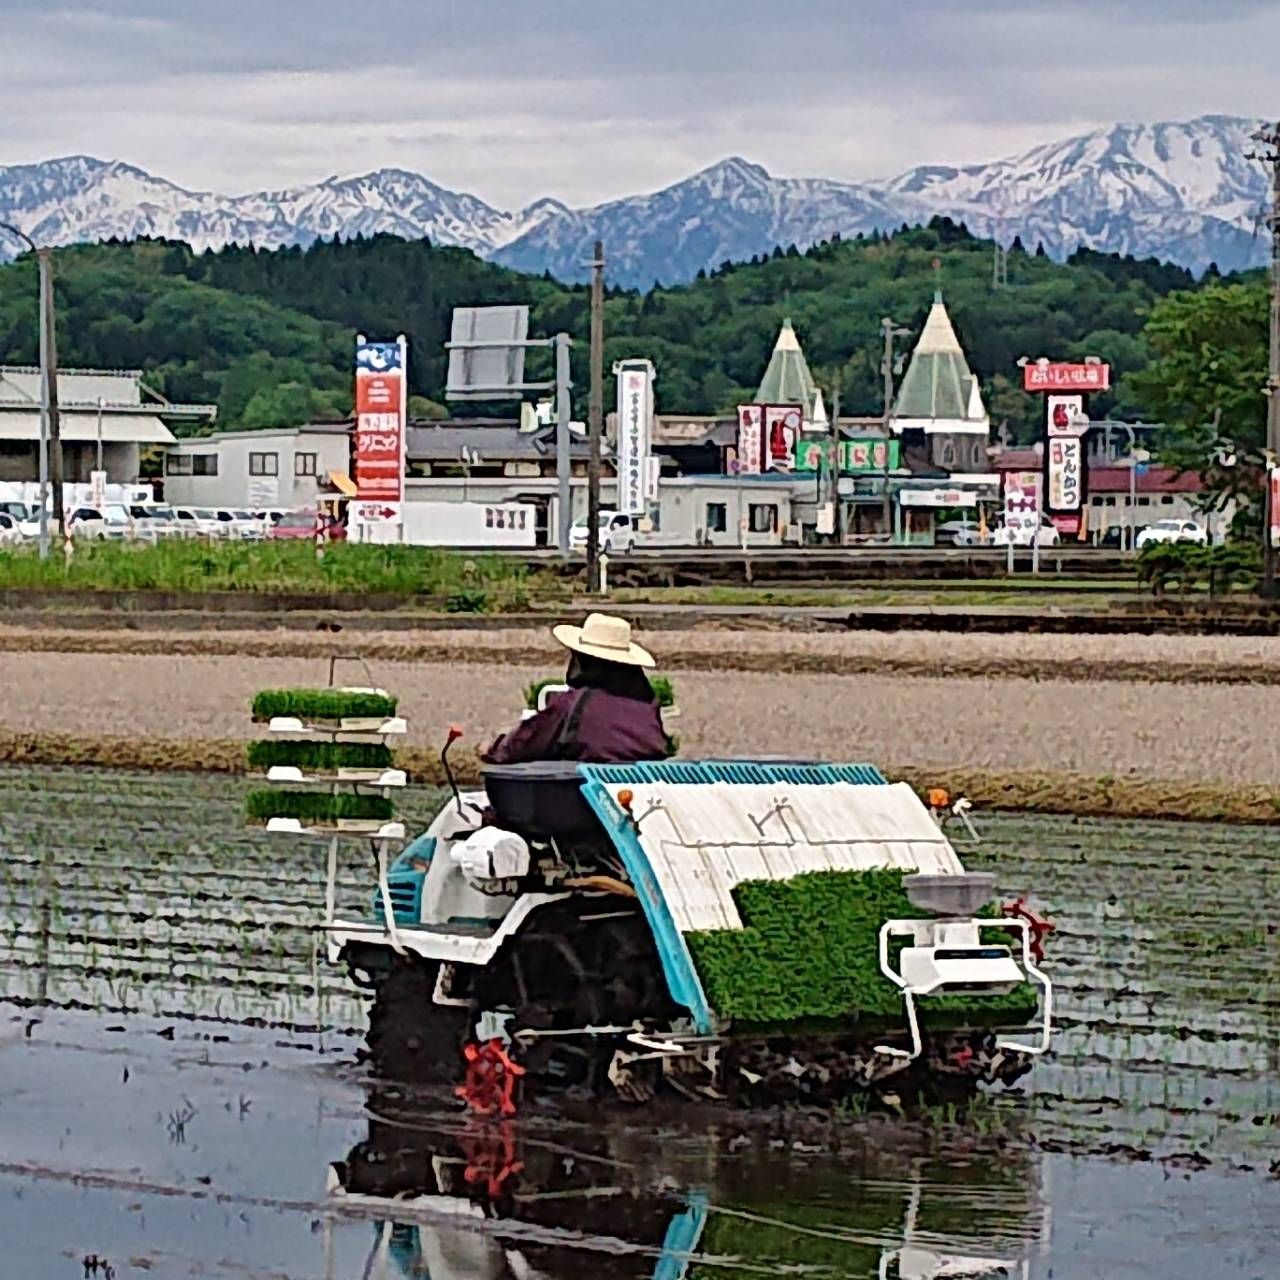 R5年富山県産コシヒカリ玄米5kg×6袋✳️関東、東海、信越、関西地方